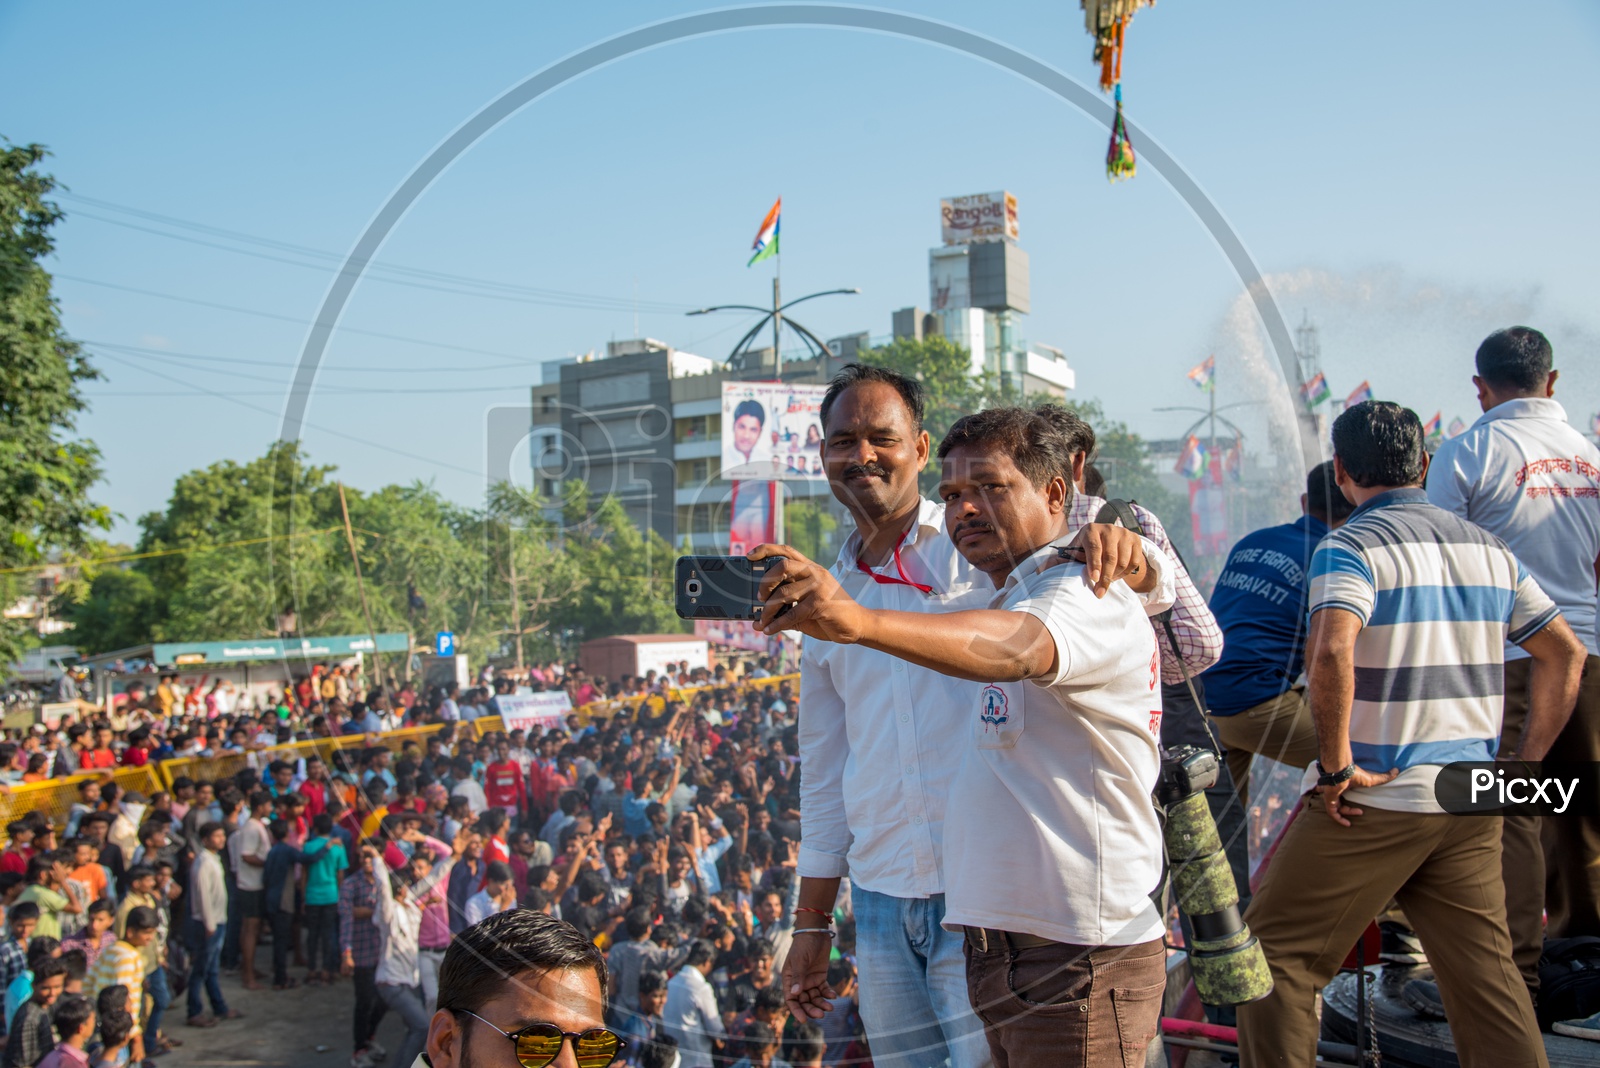 Crowd Or People Taking Selfies At The Dahi Handi Event